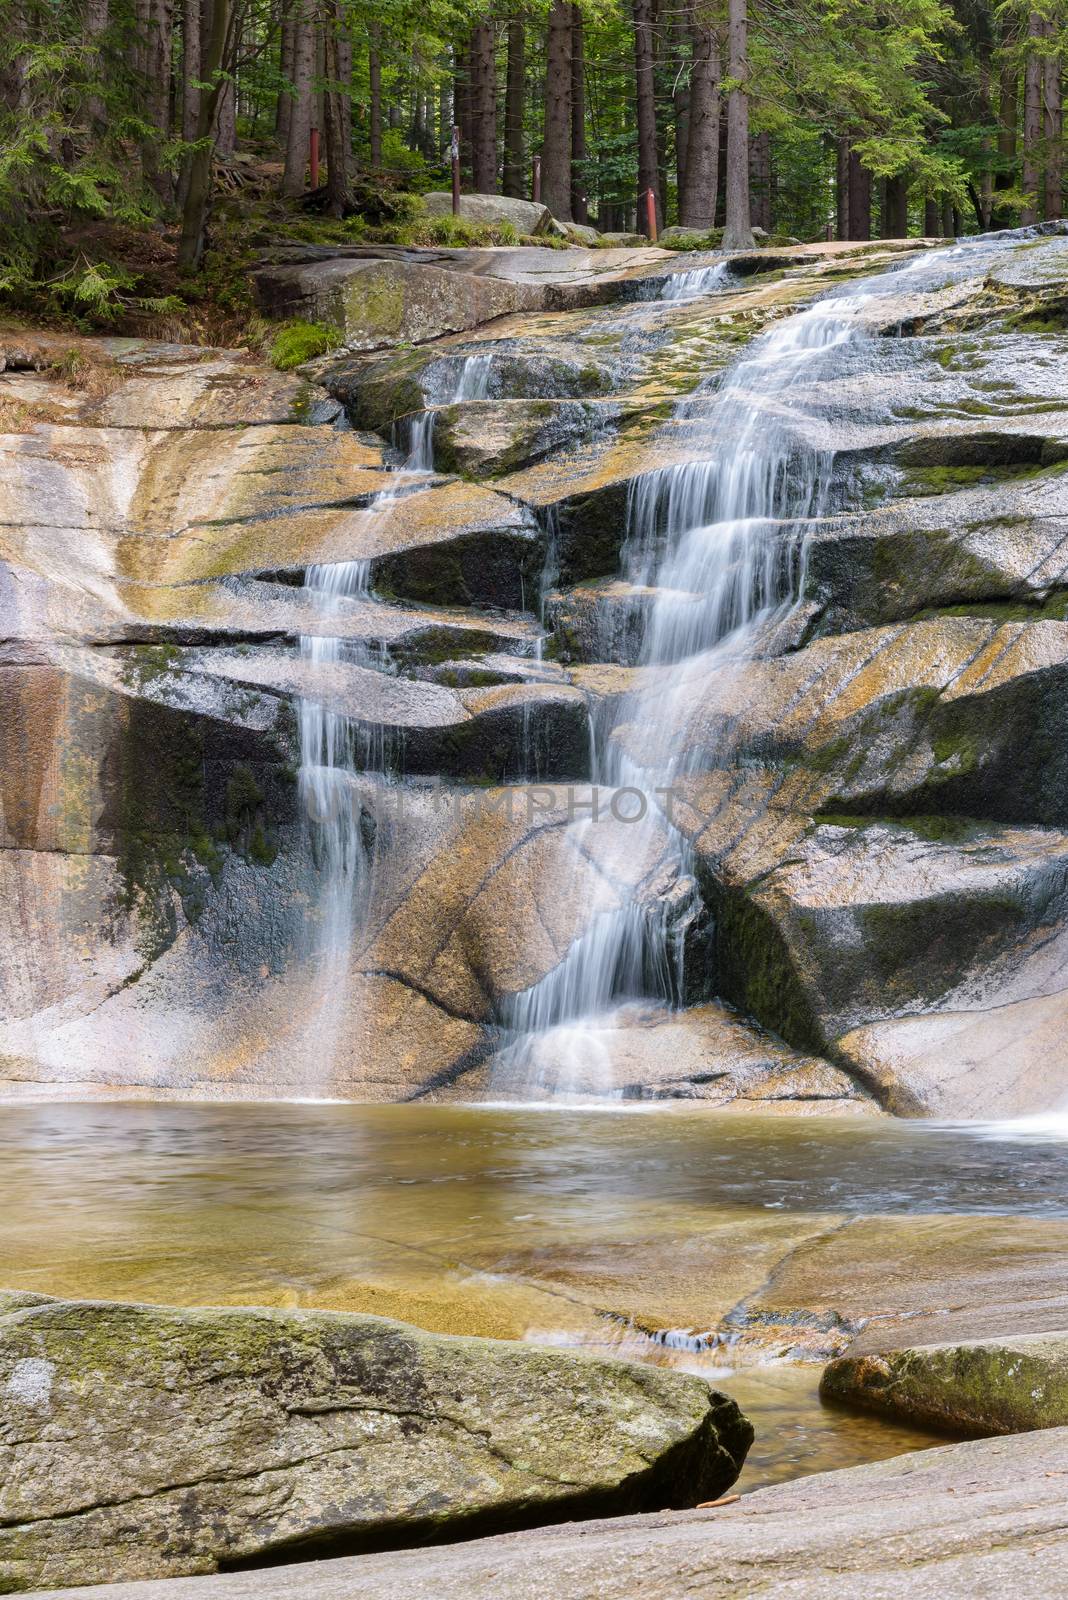 Closeup of Mumlava Waterfall in Czech Republic by mkos83